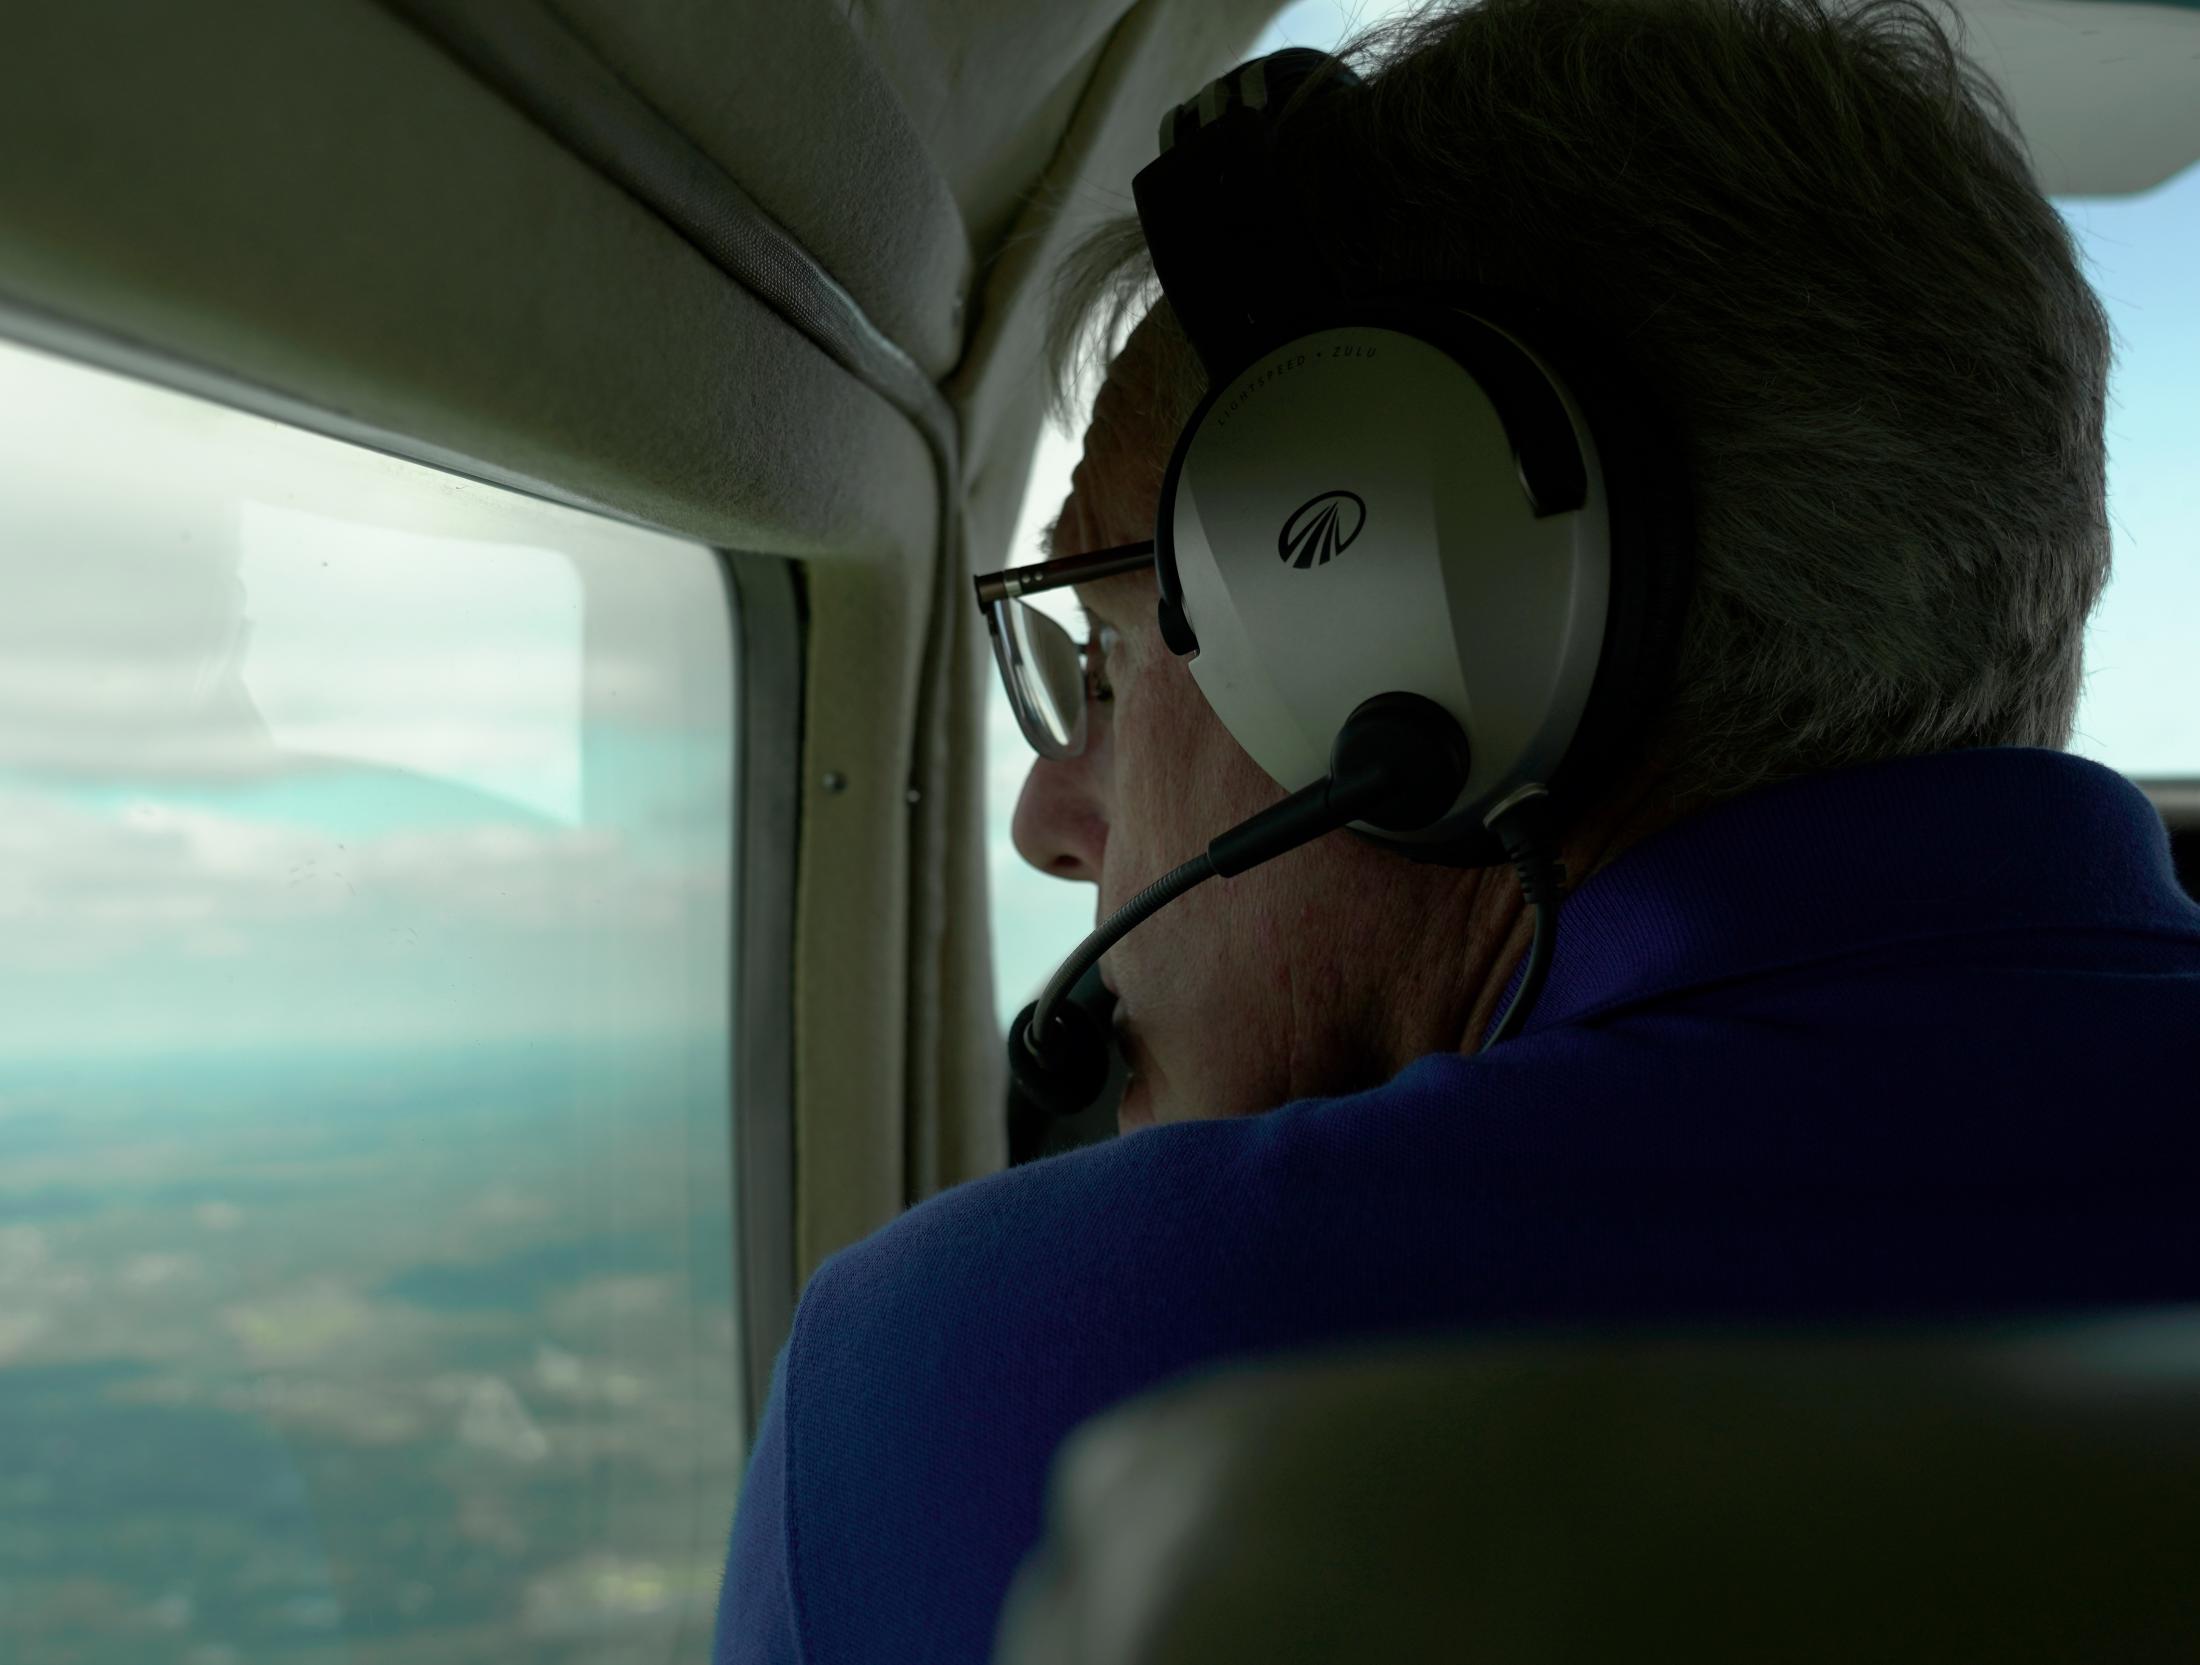 Help From Above - Volunteer pilot Steve Wendling gazes outside his window...